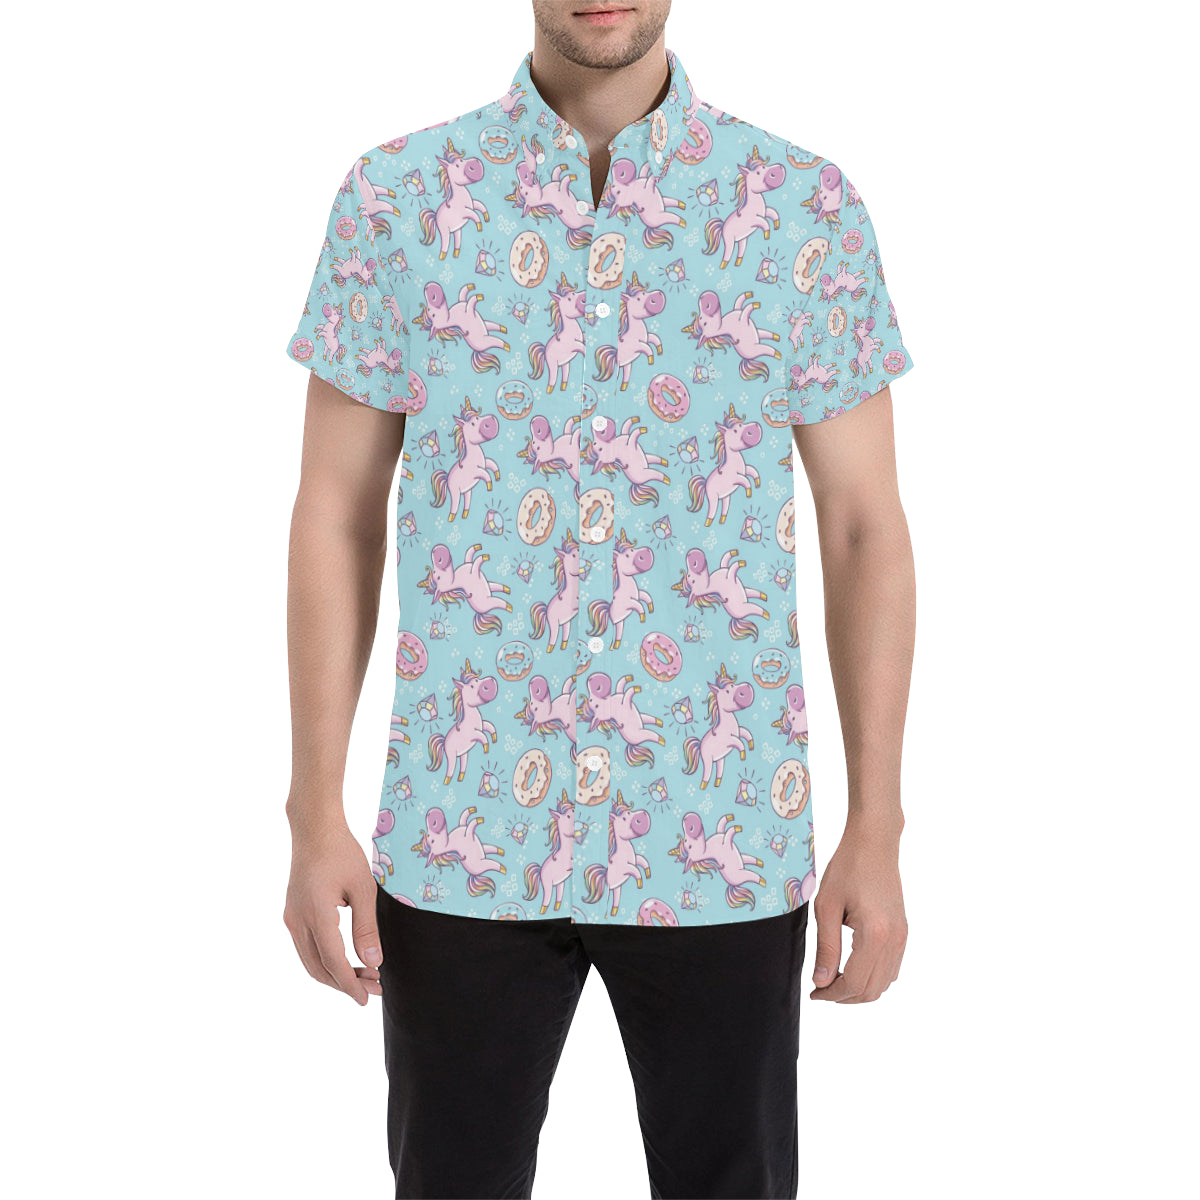 Donut Unicorn Pattern Print Design DN016 Men's Short Sleeve Button Up Shirt